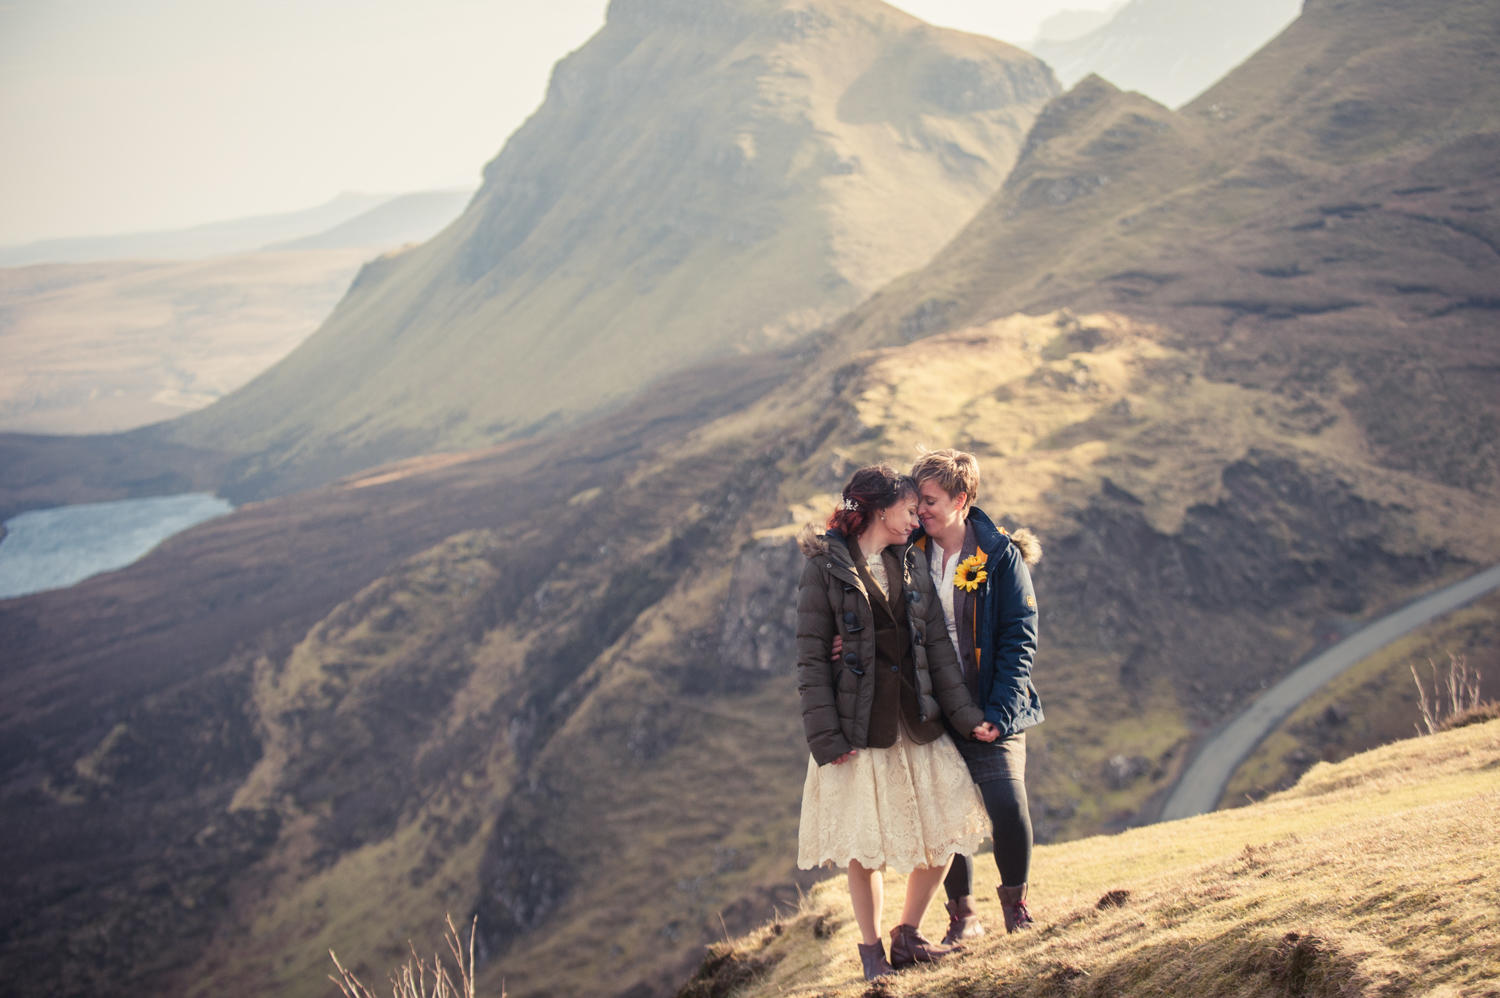 Vicki & Sarah’s wedding on the Isle of Skye